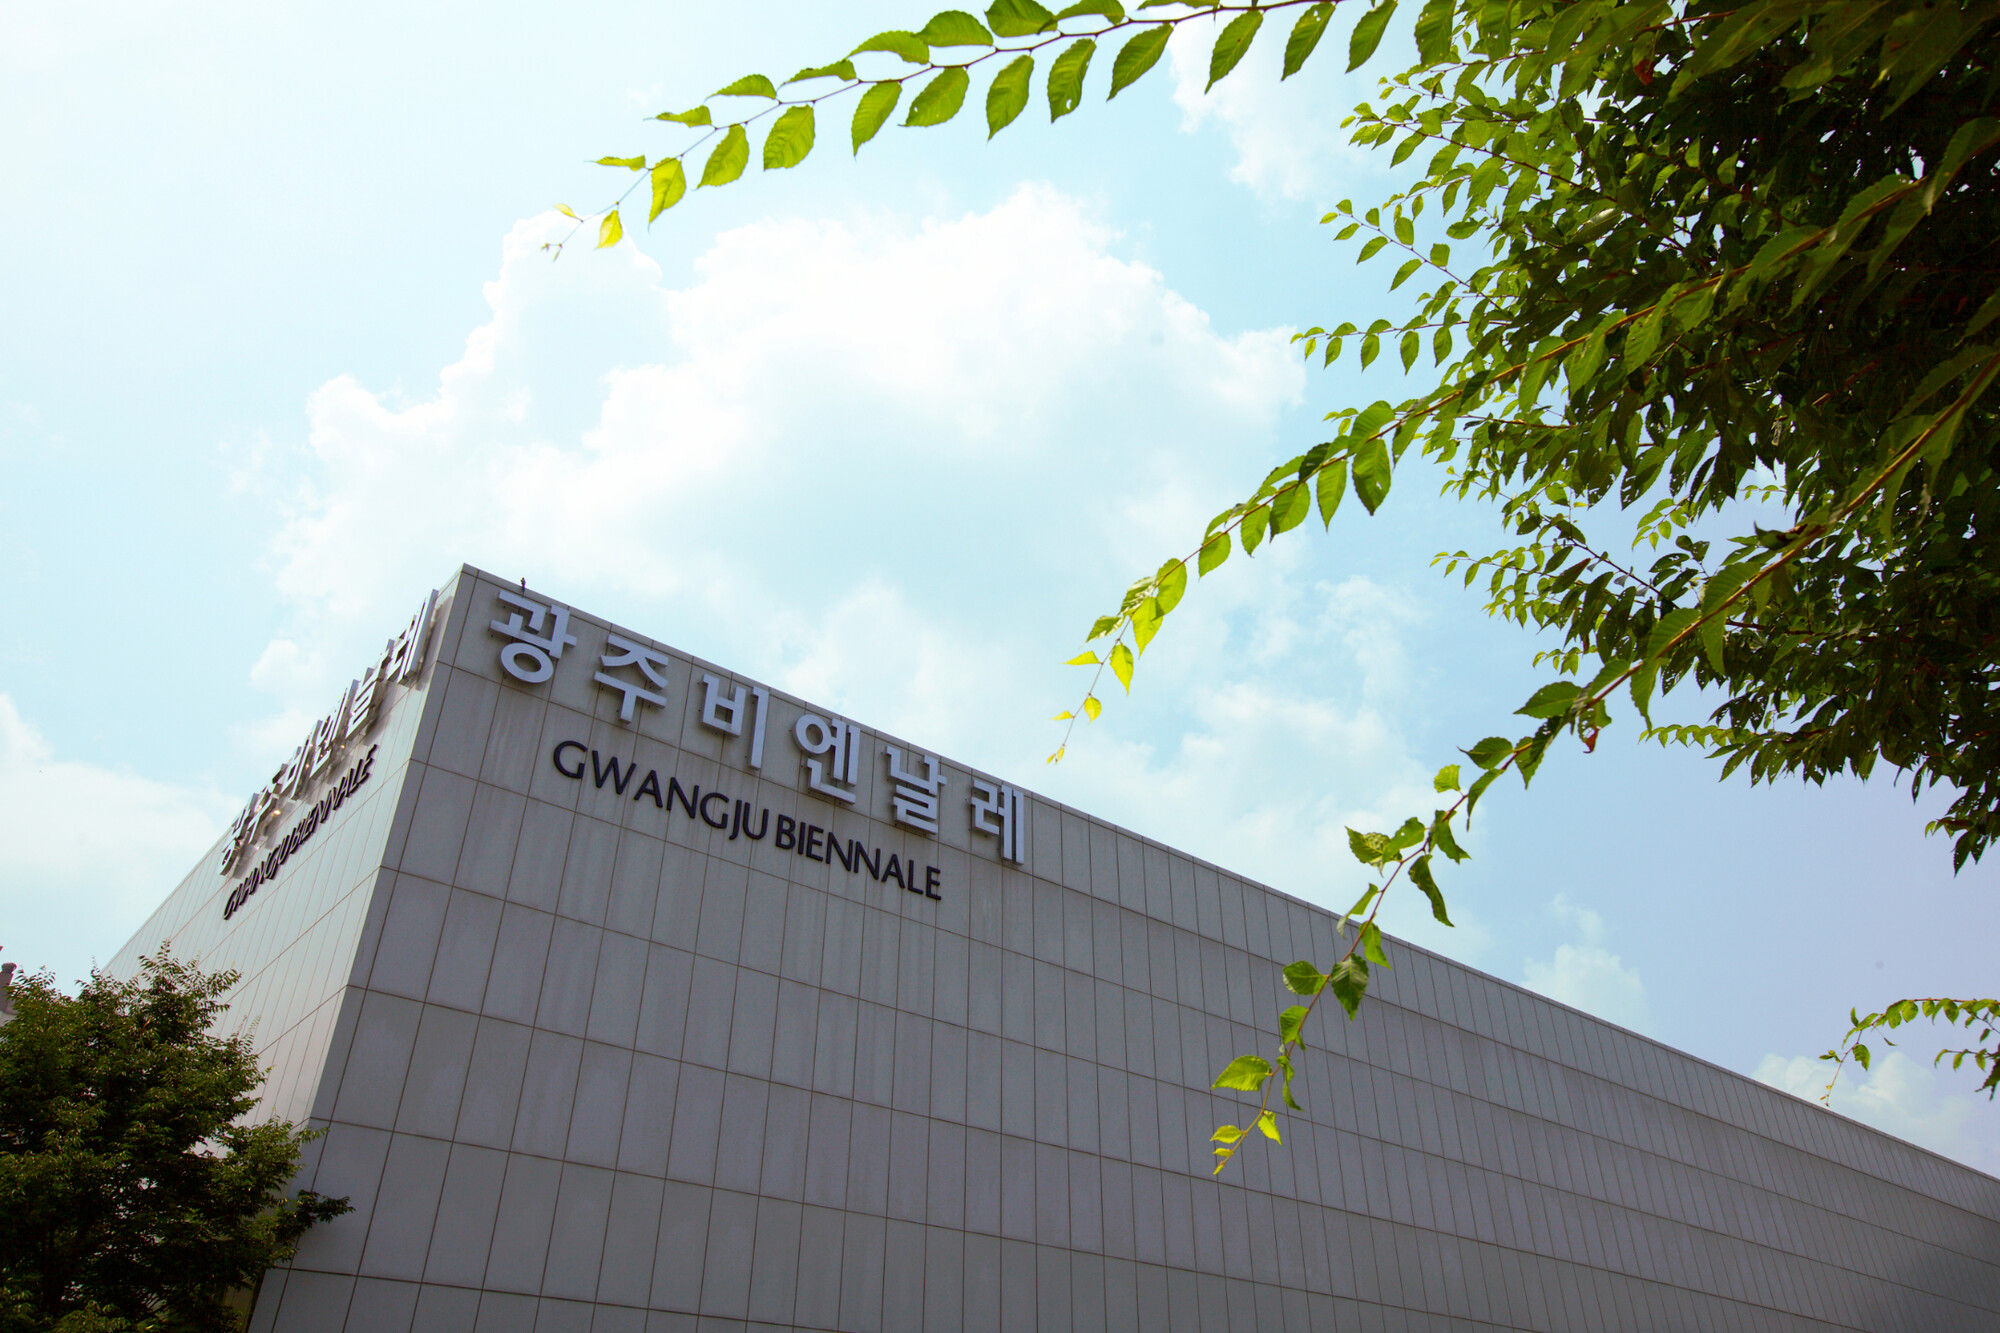 Pavillon der XIV Gwangju Biennale – Anzeigen